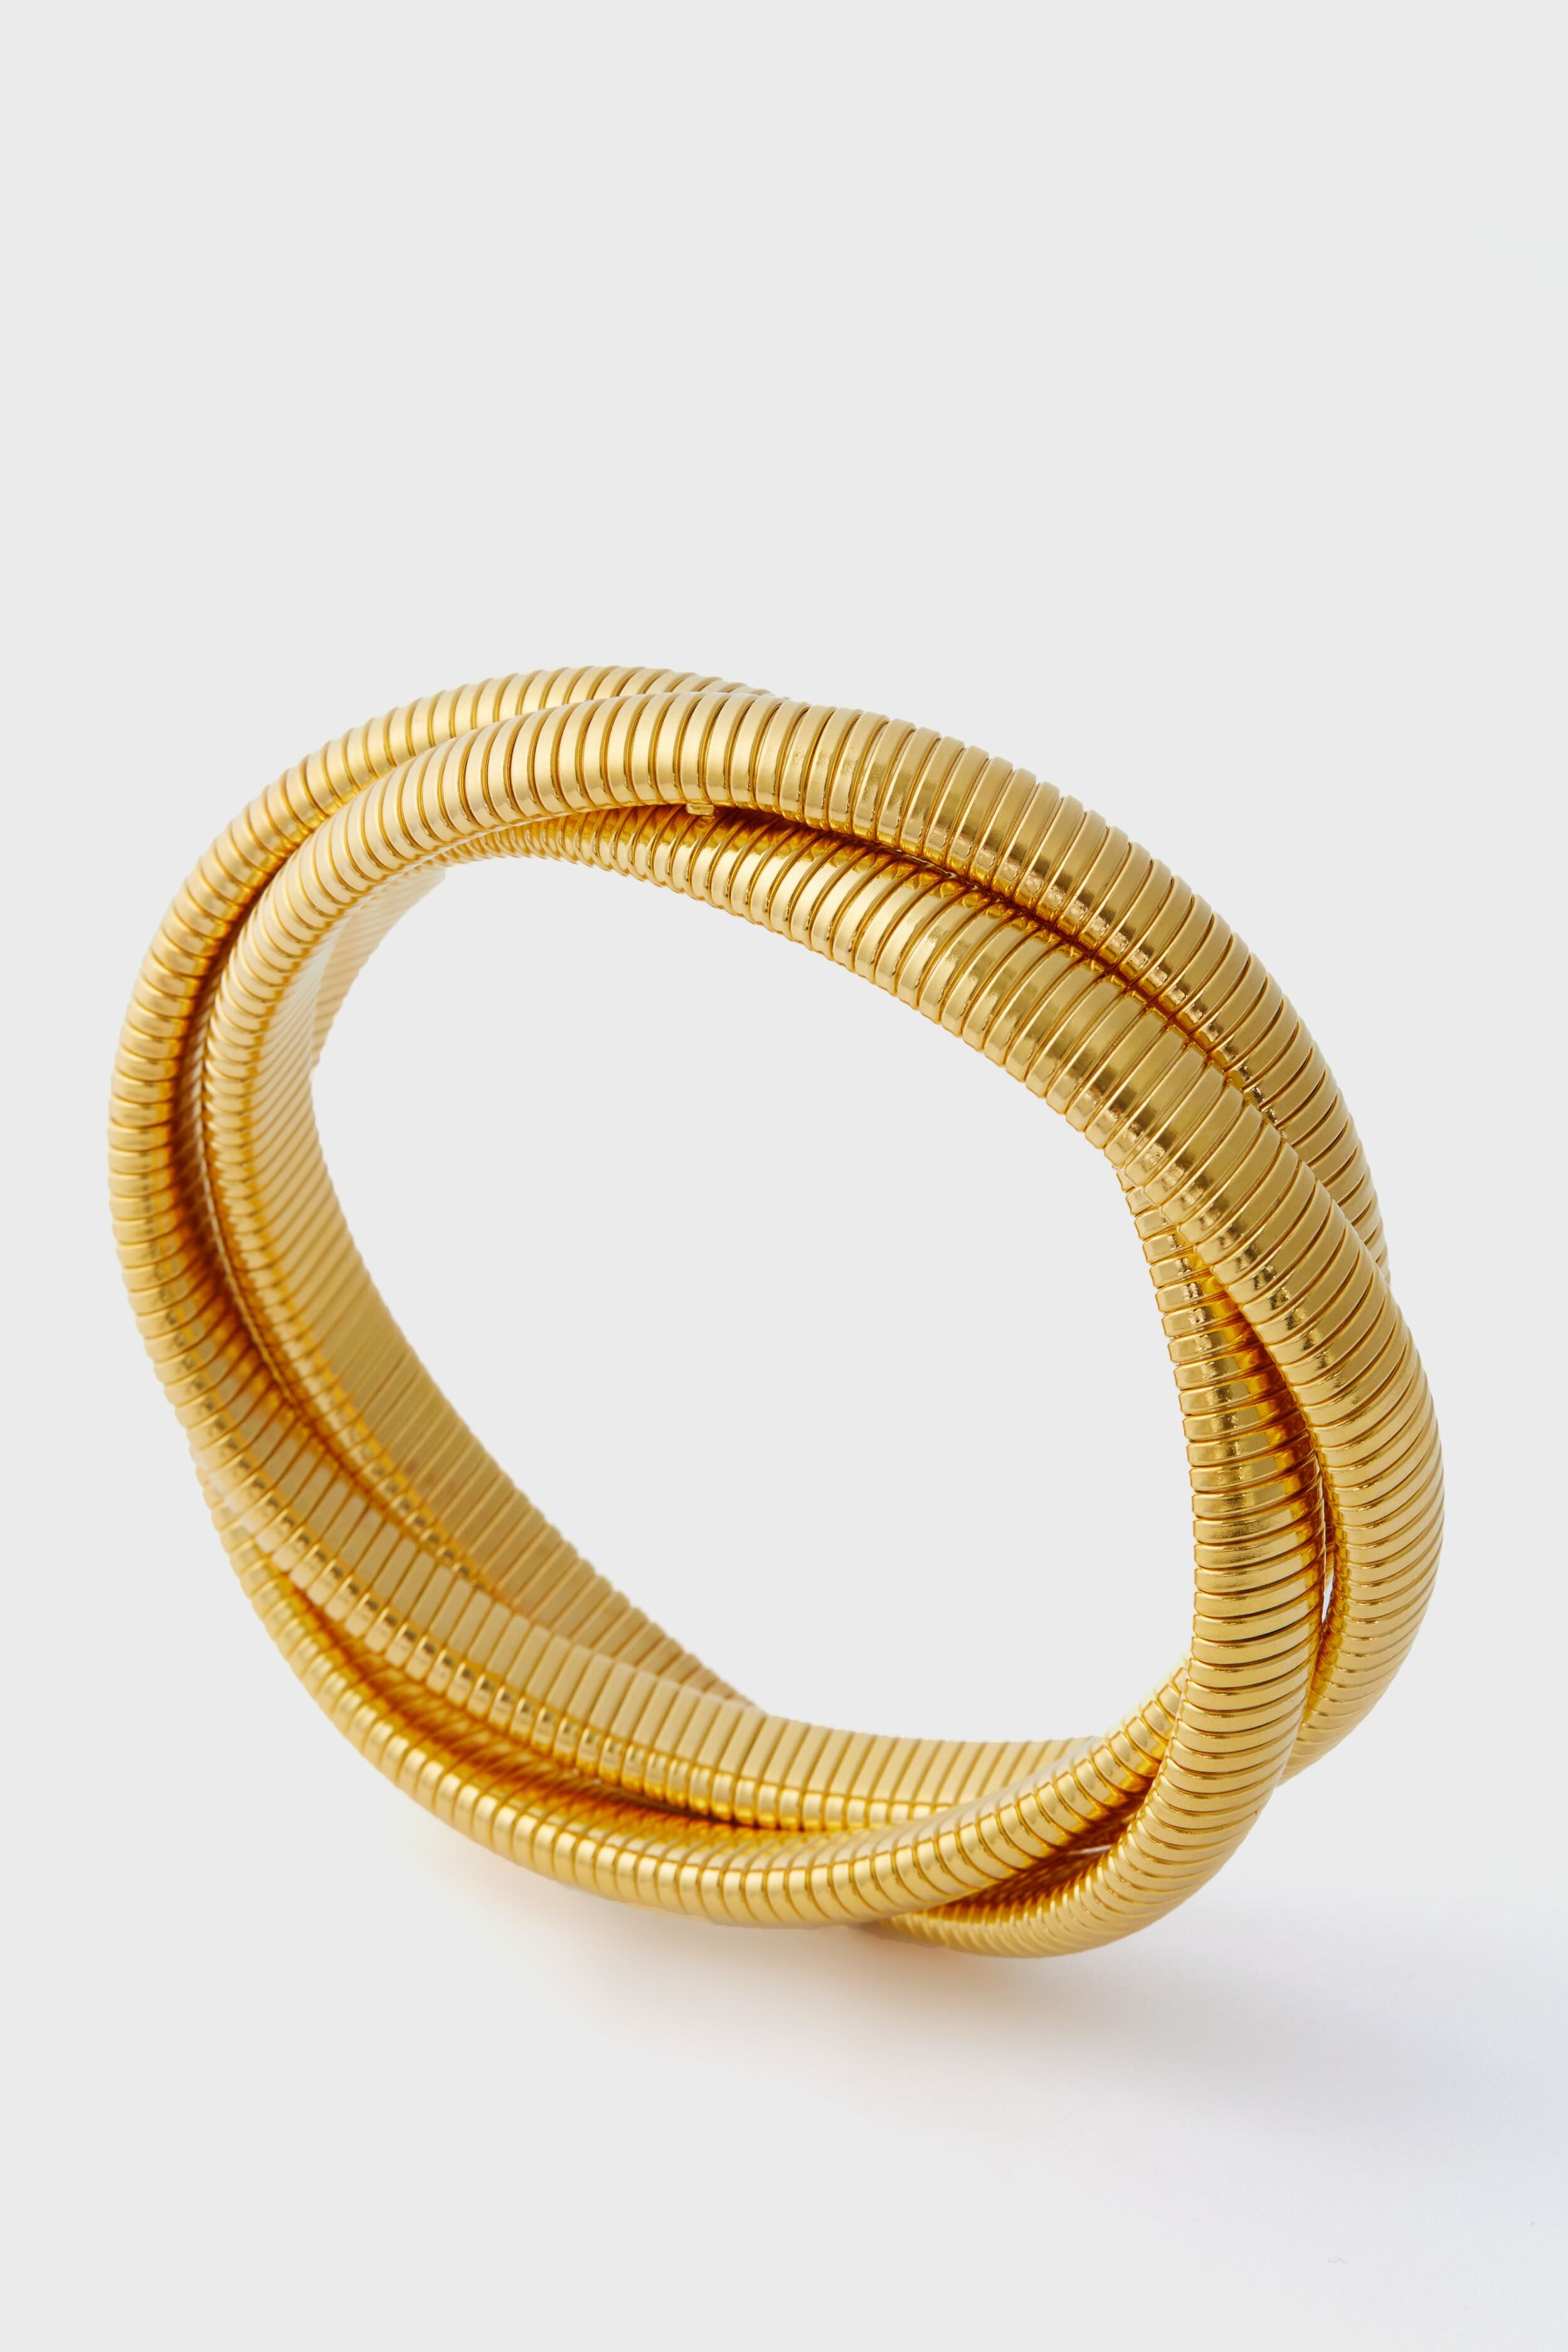 Ben-Amun Jewelry Cobra Bangle